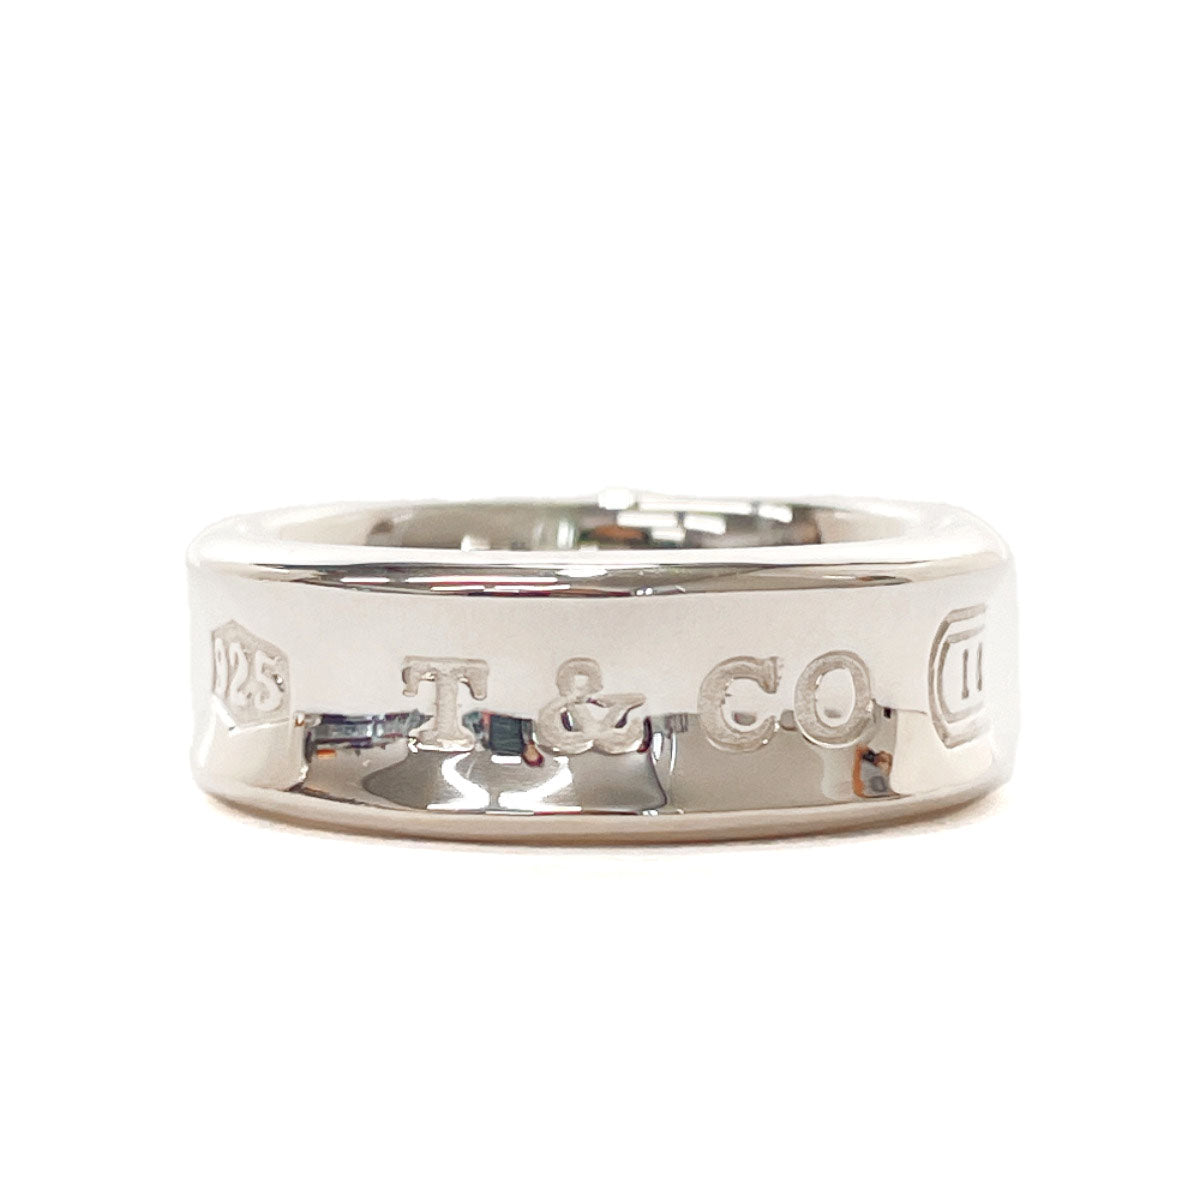 Tiffany Co Rings 1837 Ring